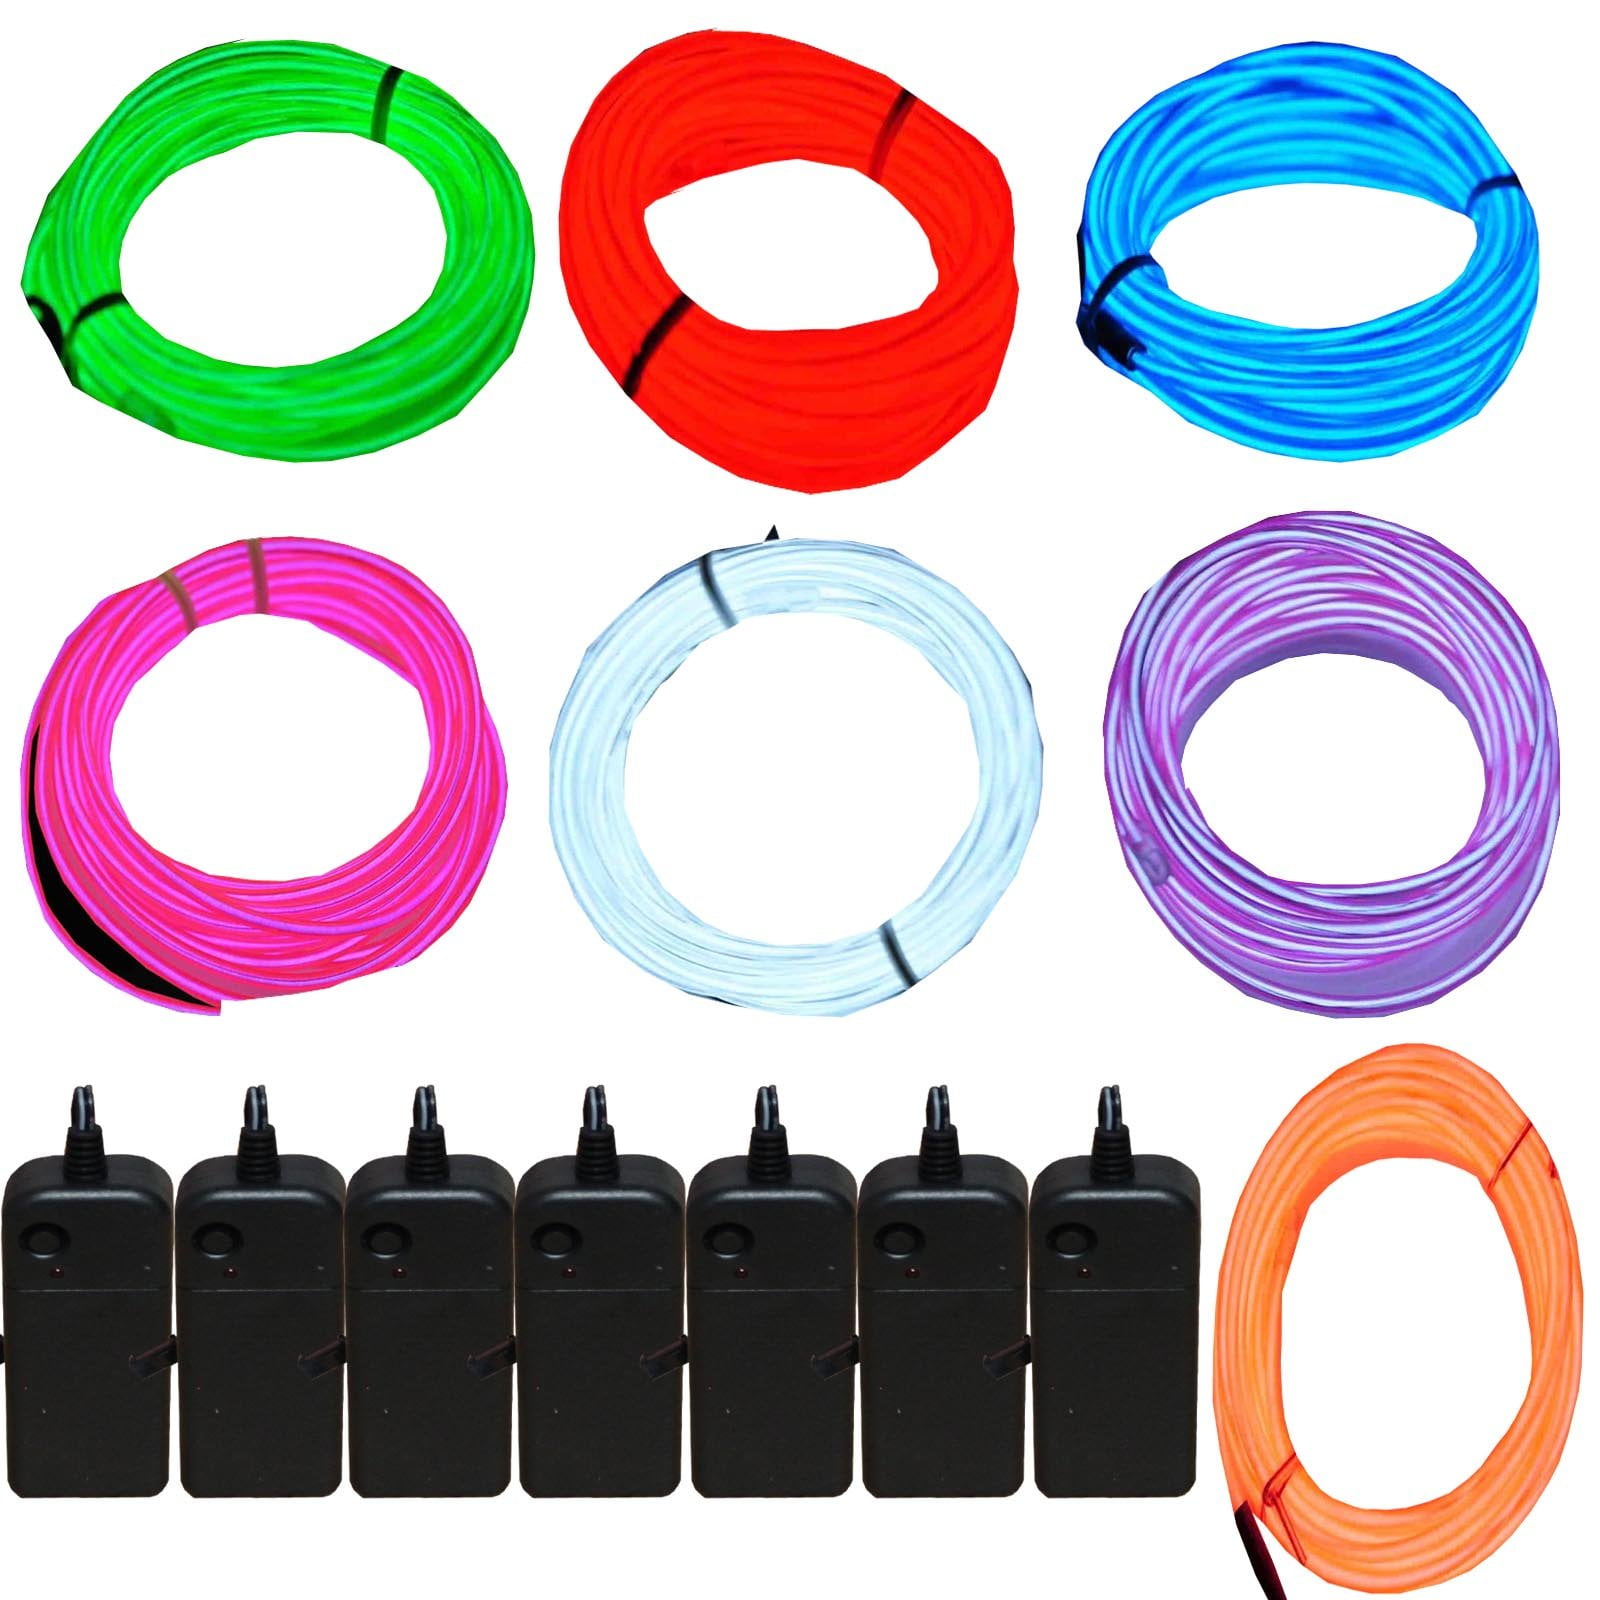 Bendable EL Wire - Green 3m - COM-14698 - SparkFun Electronics